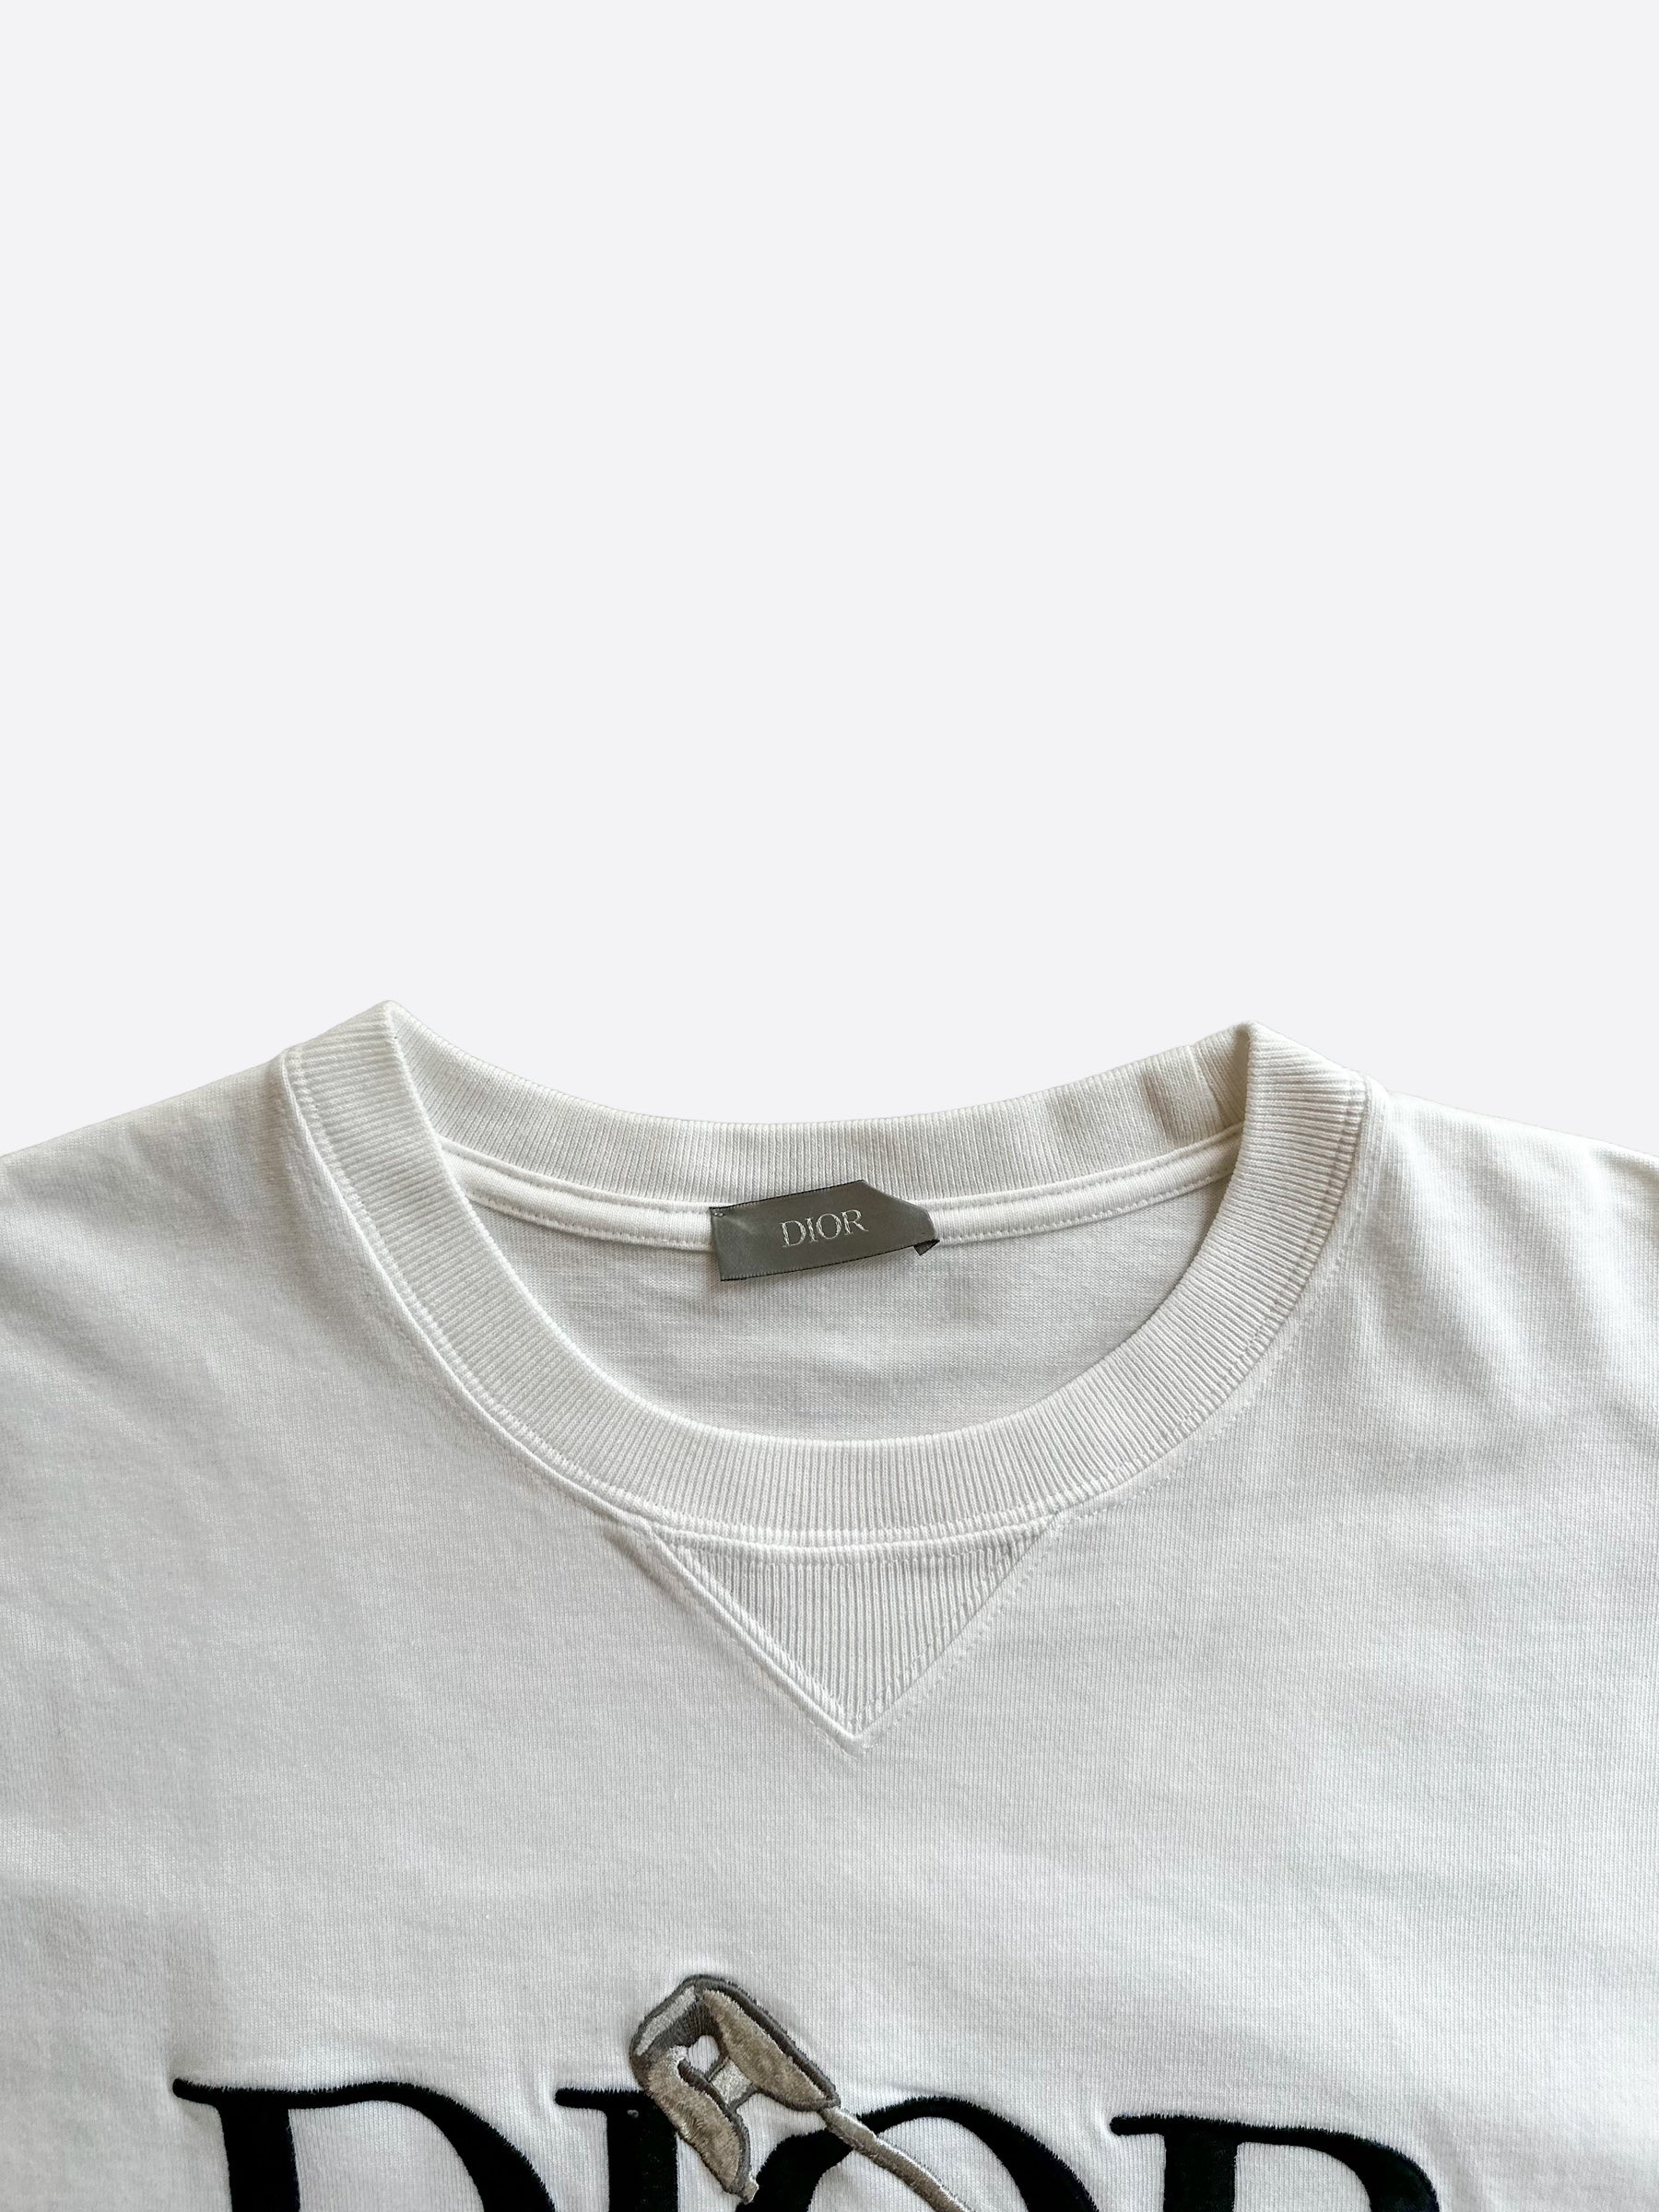 Dior Judy Blame White & Black Pin Embroidered Logo T-Shirt